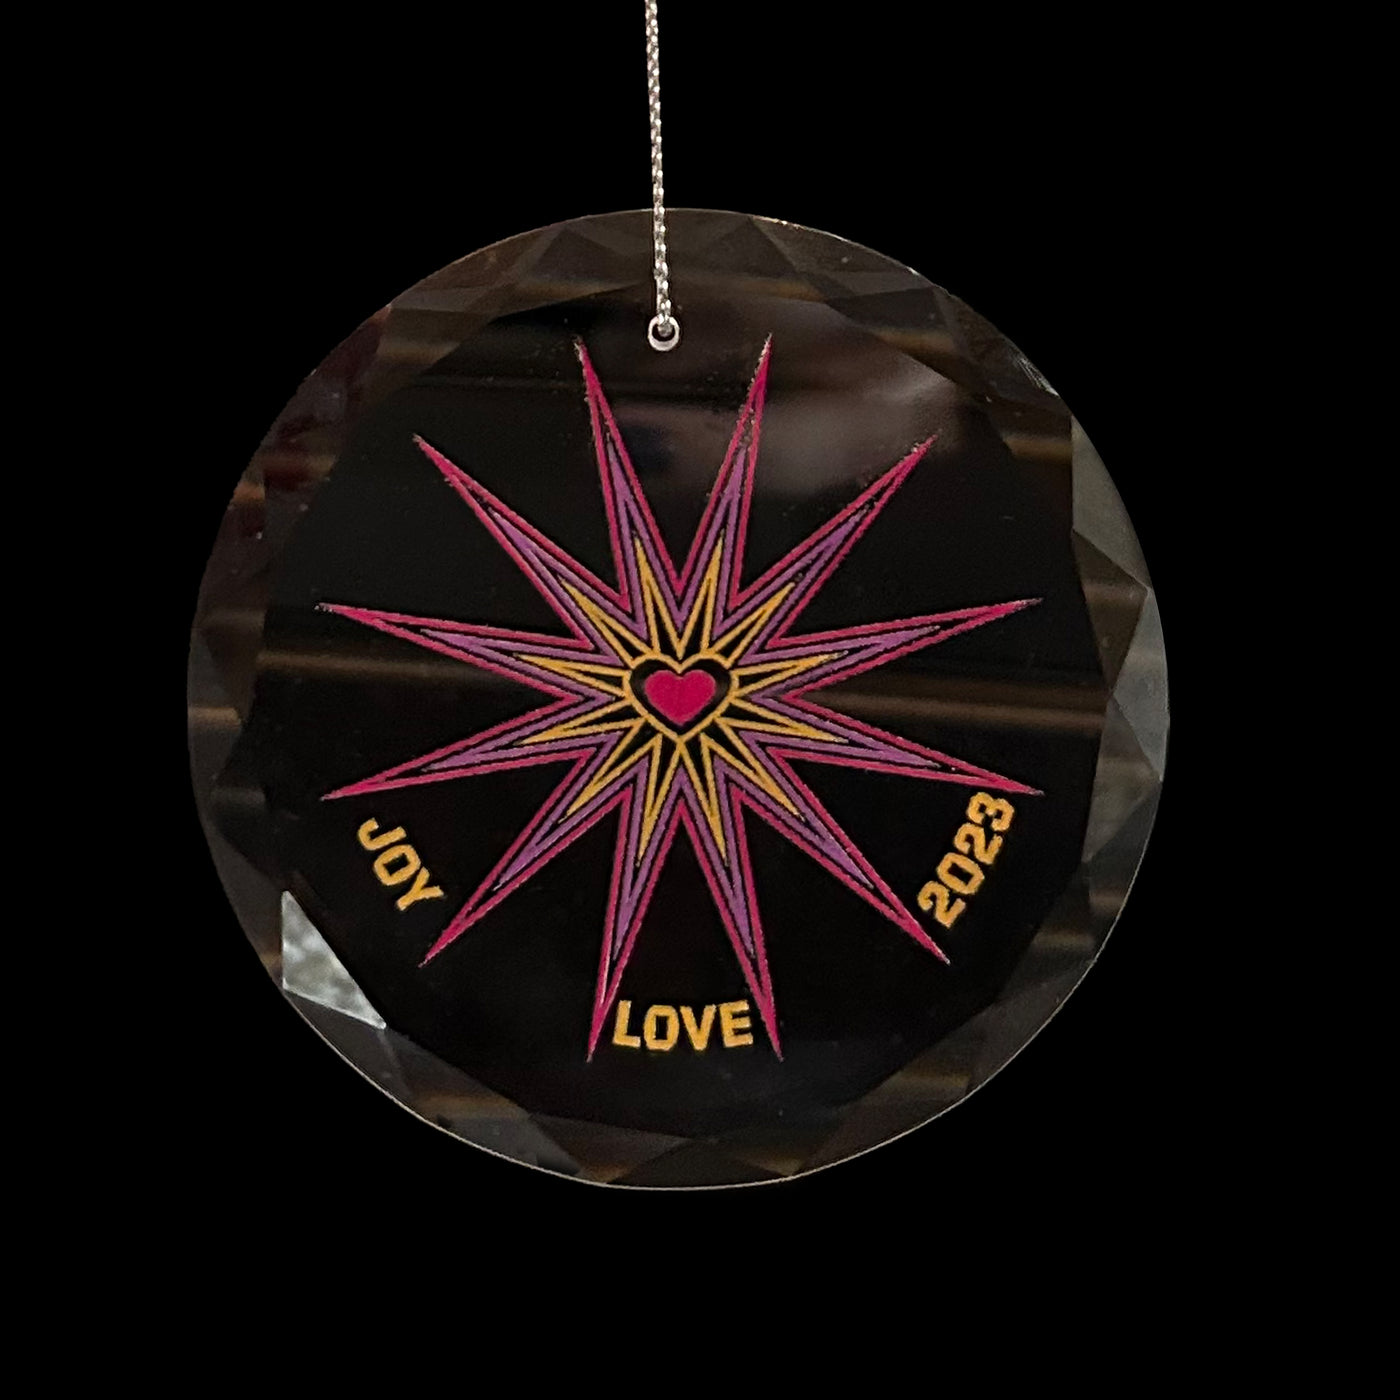 Joy & Love Ornament